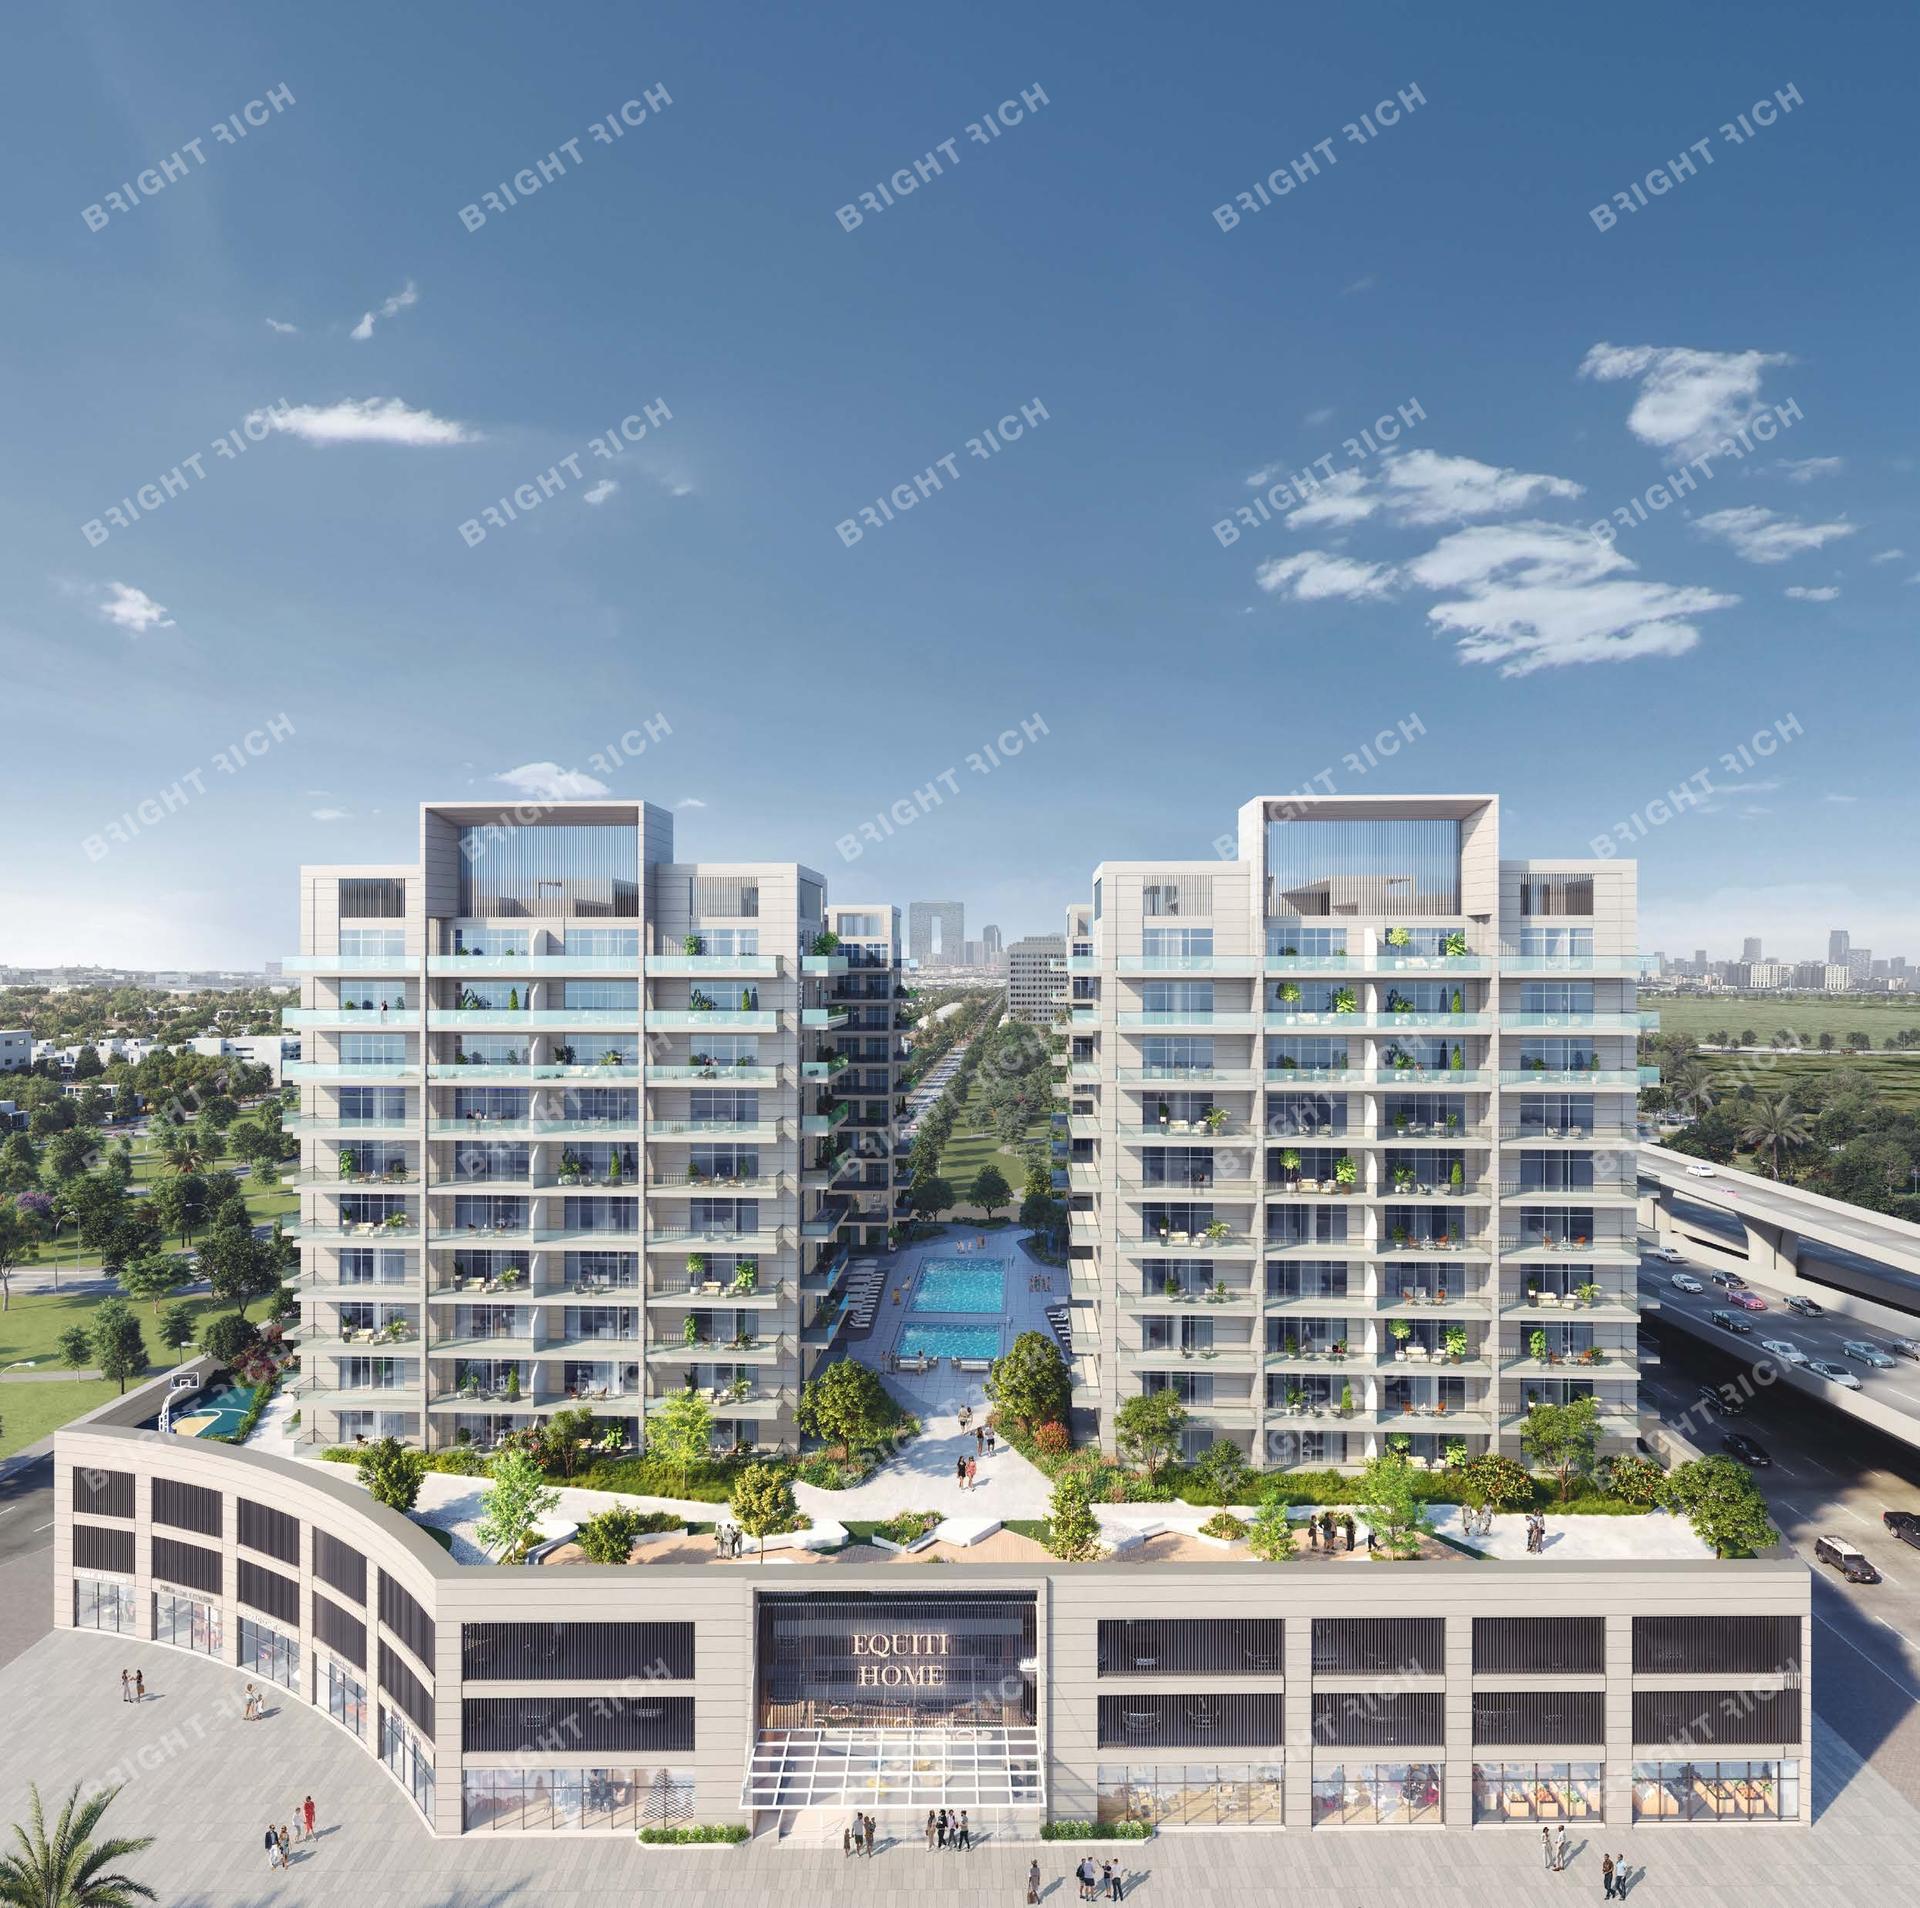 Equiti Home, apart complex in Dubai